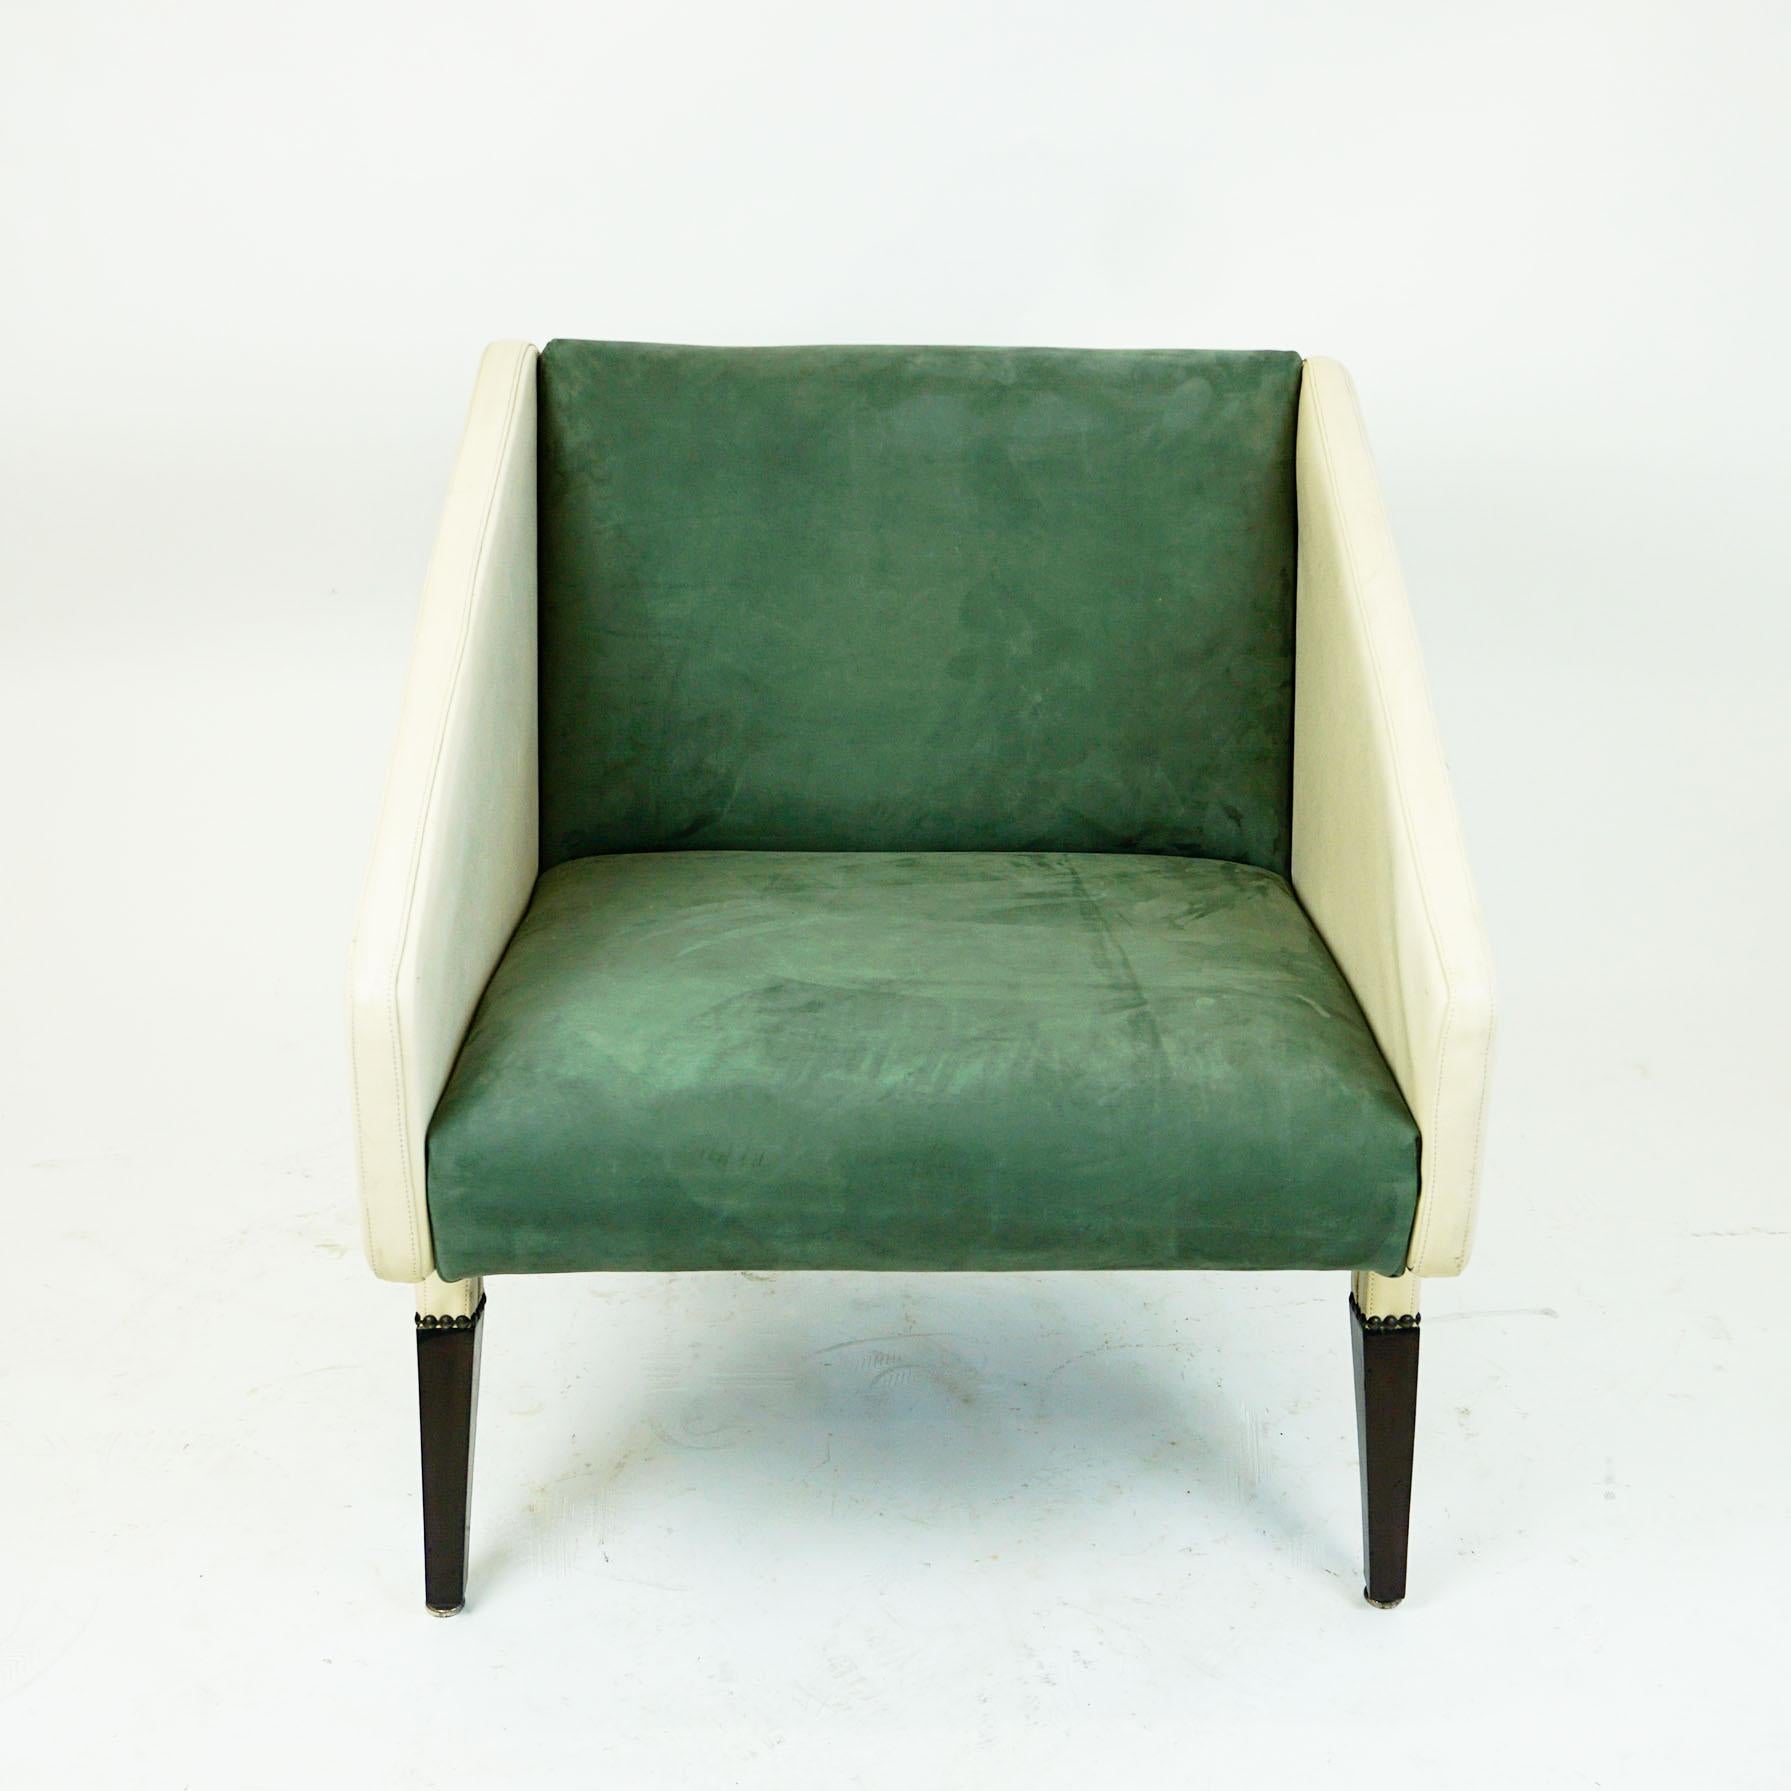 Mid-Century Modern Italian Midcentury Parco dei Principi Lounge Chair by Gio Ponti for Cassina